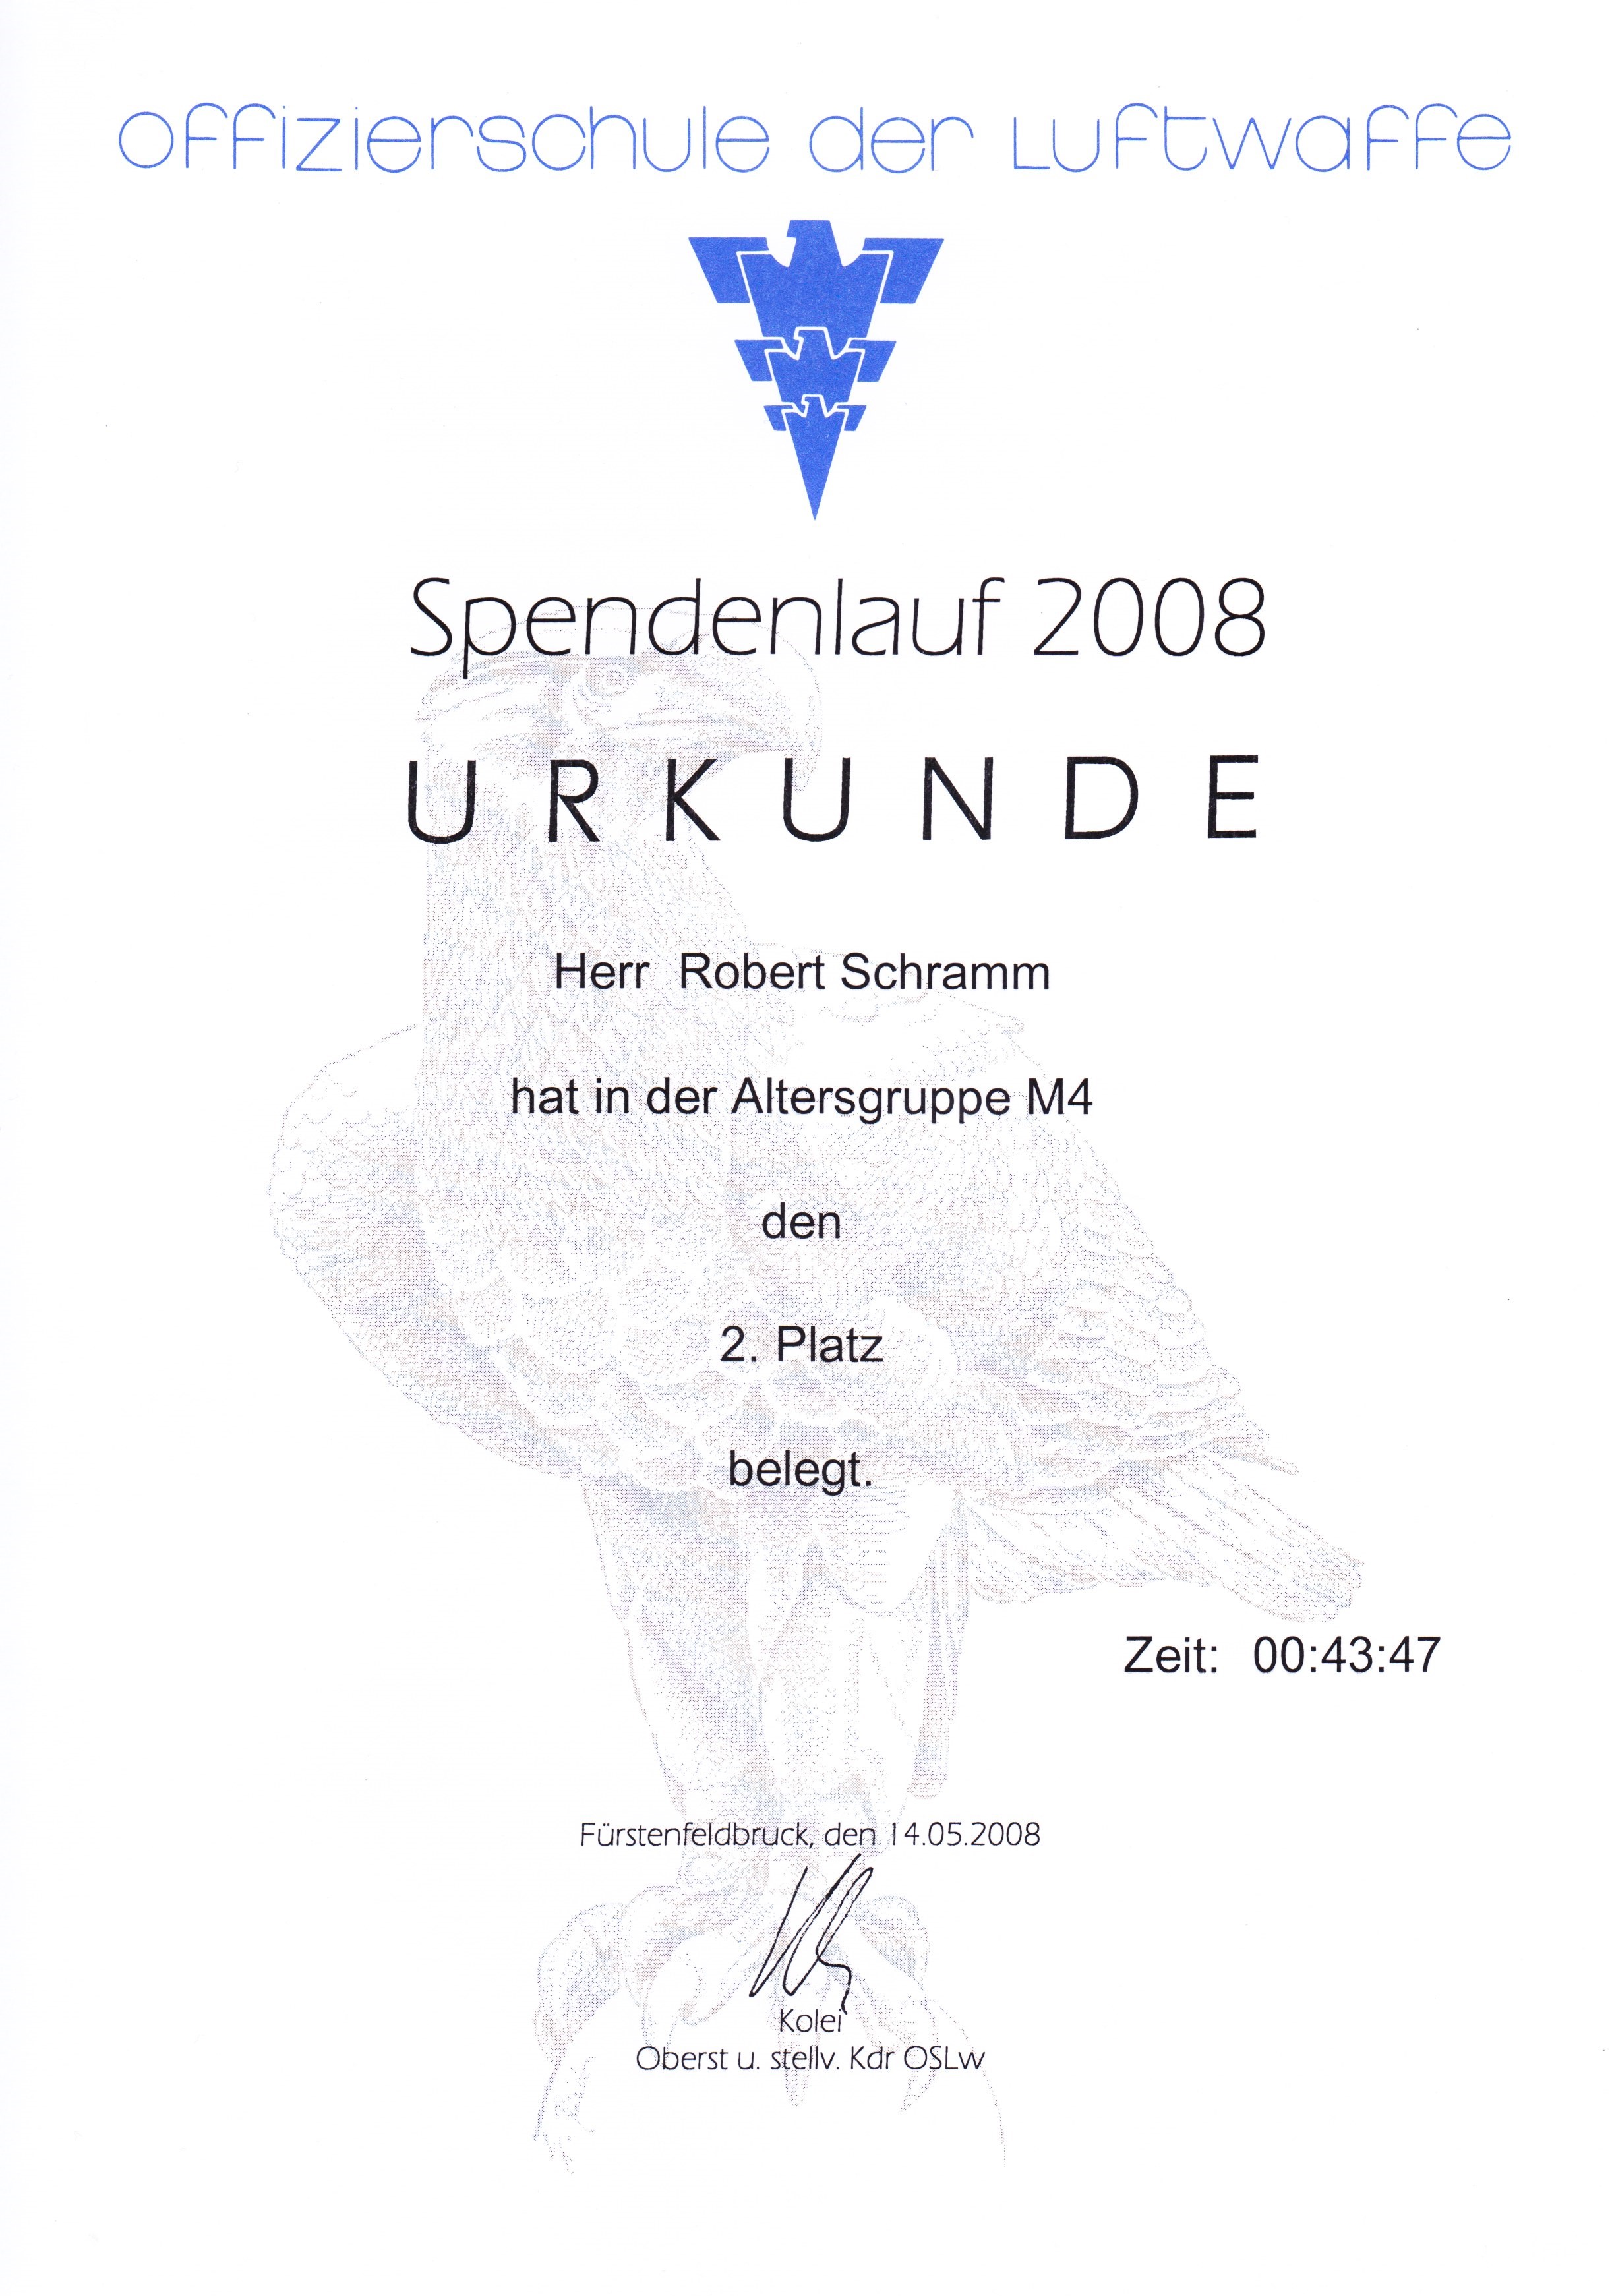 Urkunde Offiziersstaffel 2008